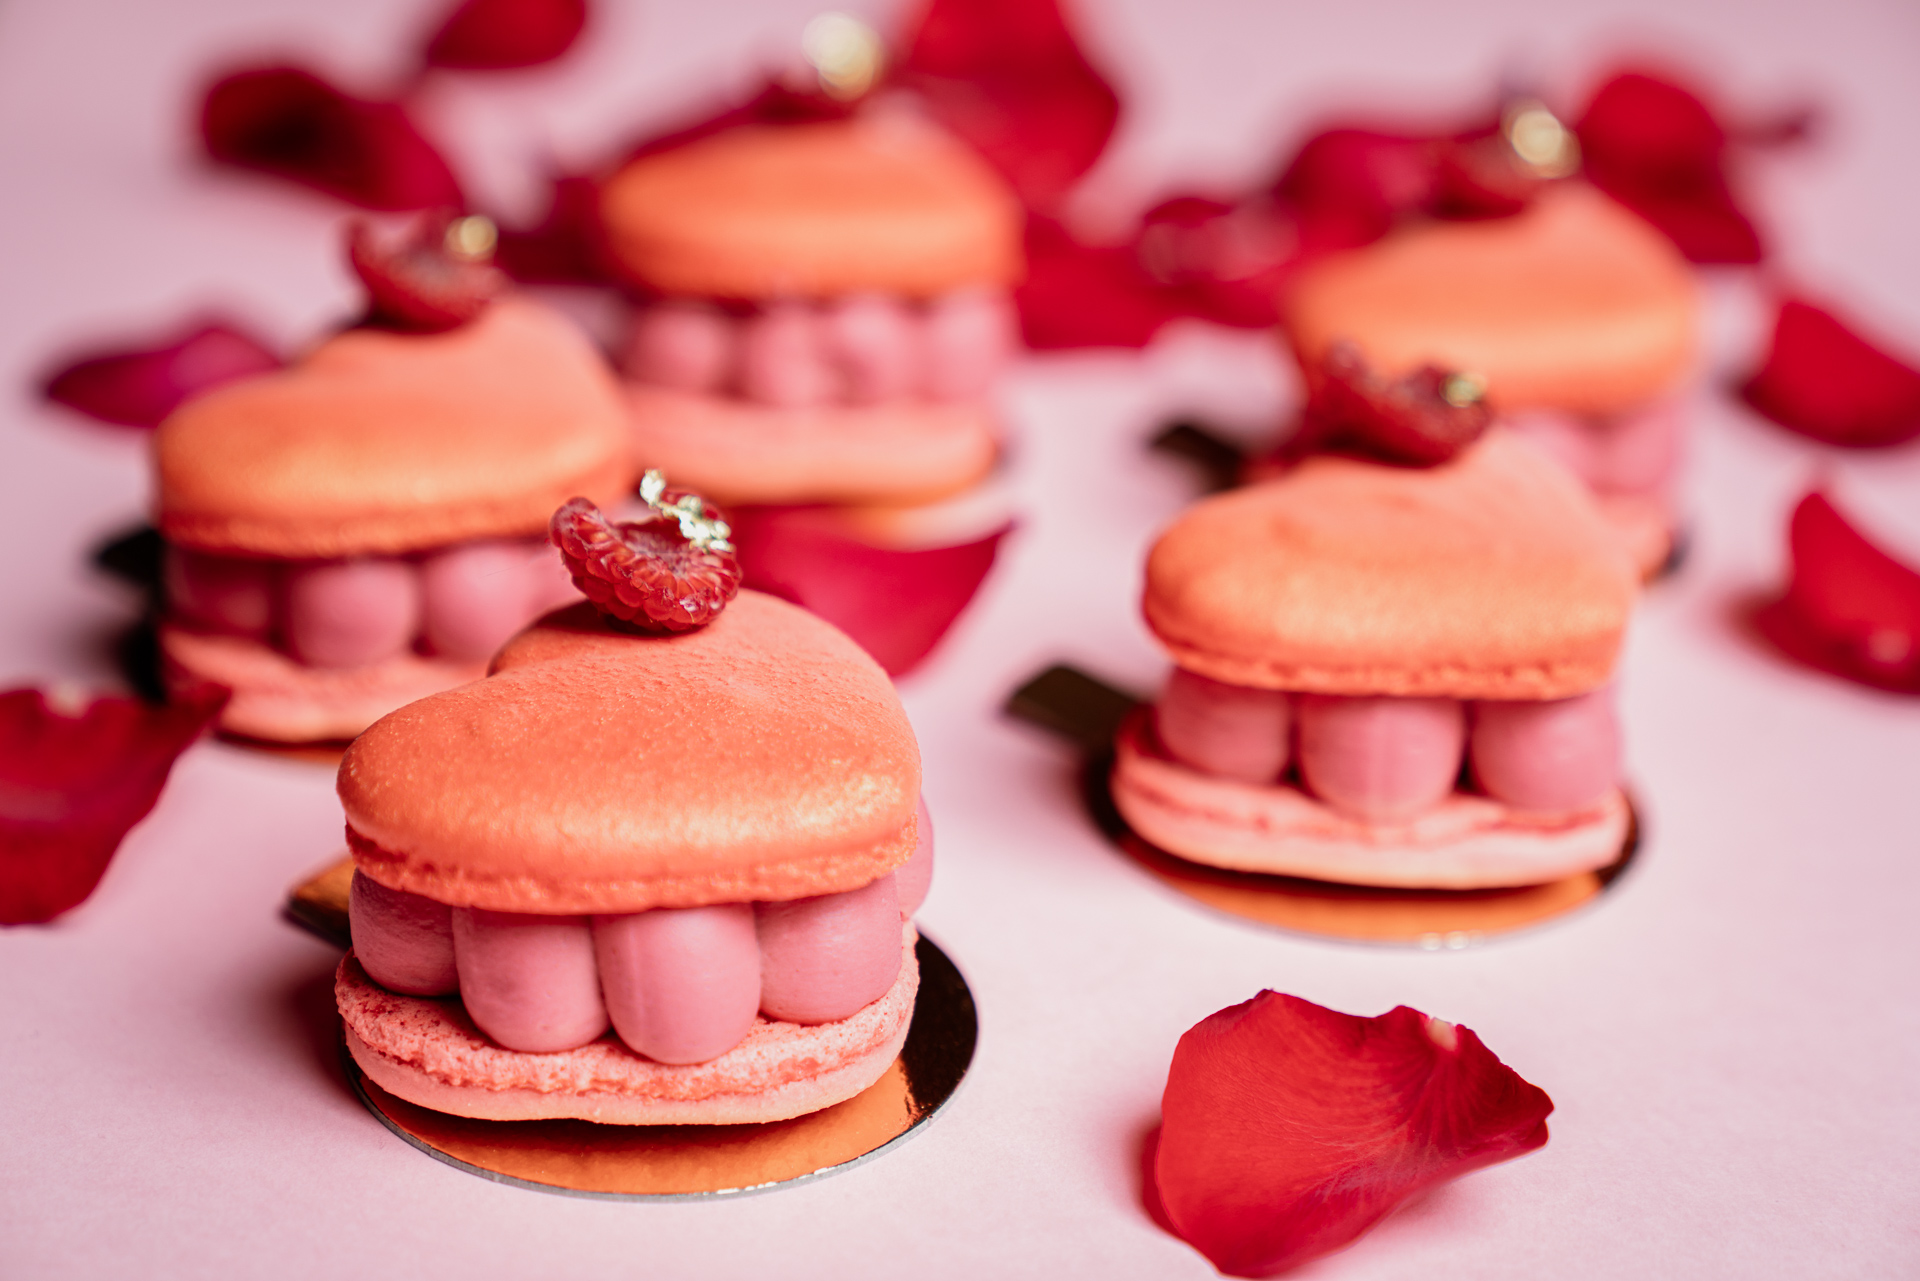 Gerbeaud Café's raspberry macaron dessert tailored to Valentine's Day